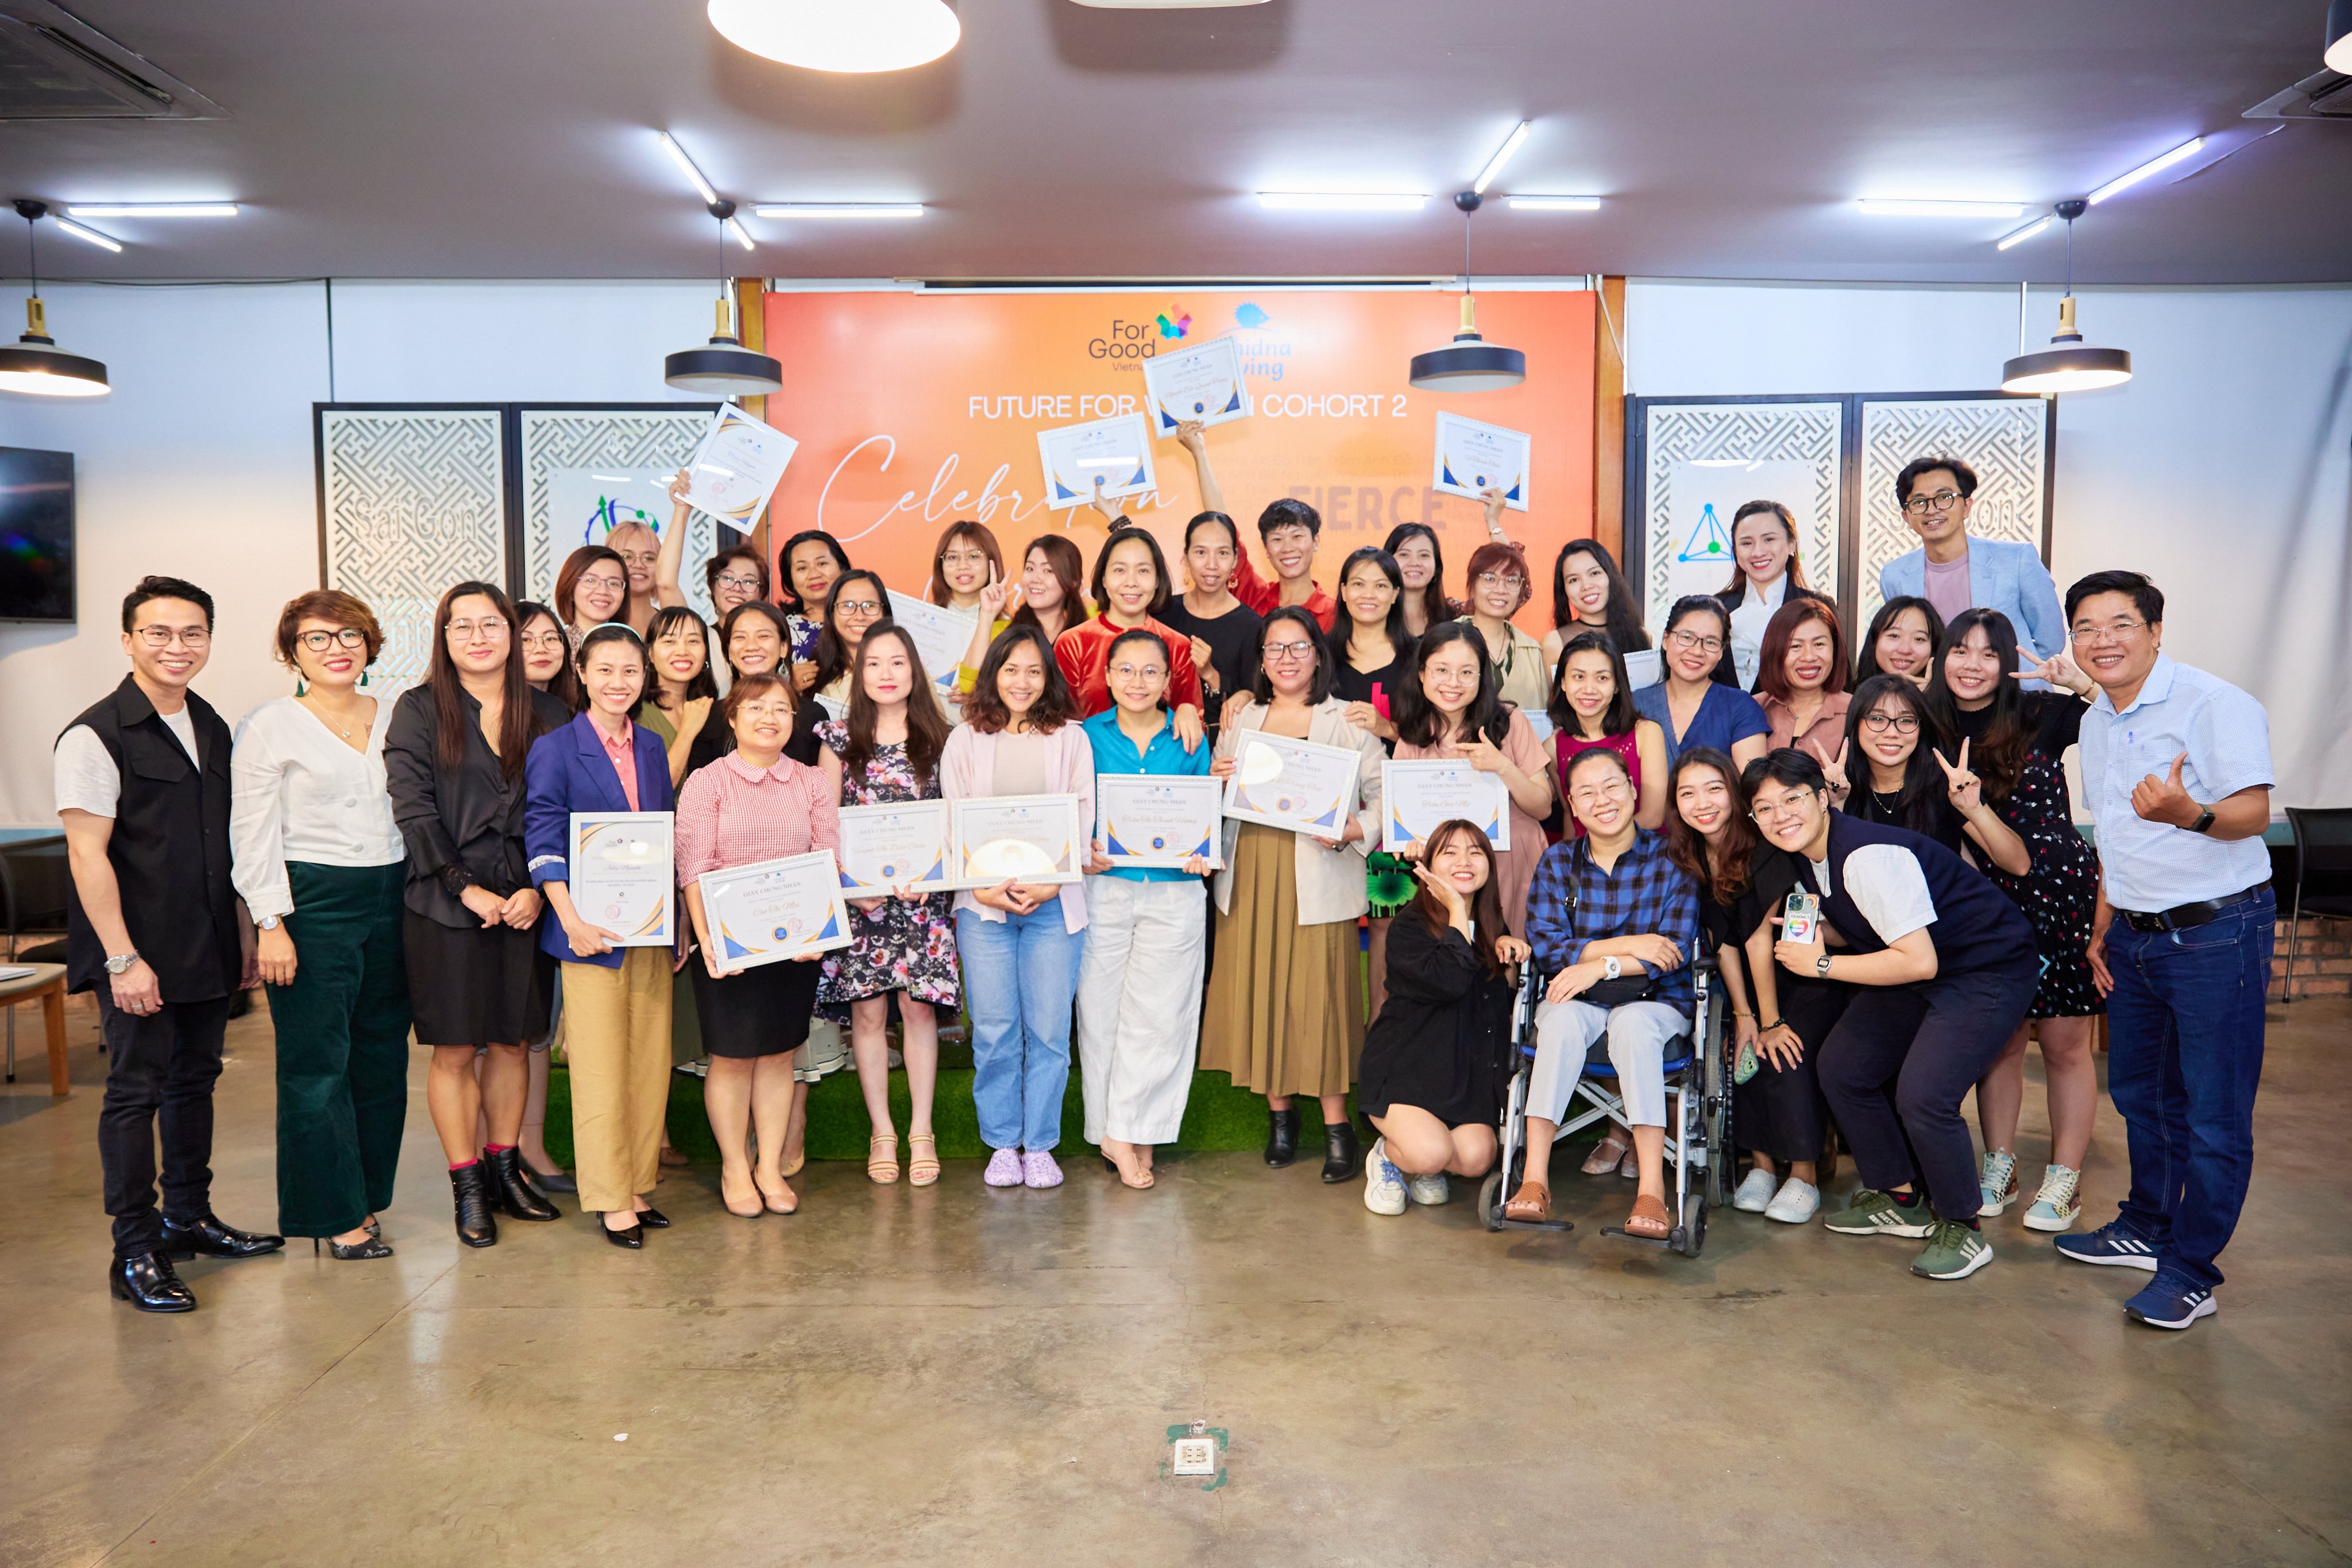 Vietnamese organization ForGood Vietnam provides training program to promote gender equality, empower women’s entrepreneurship